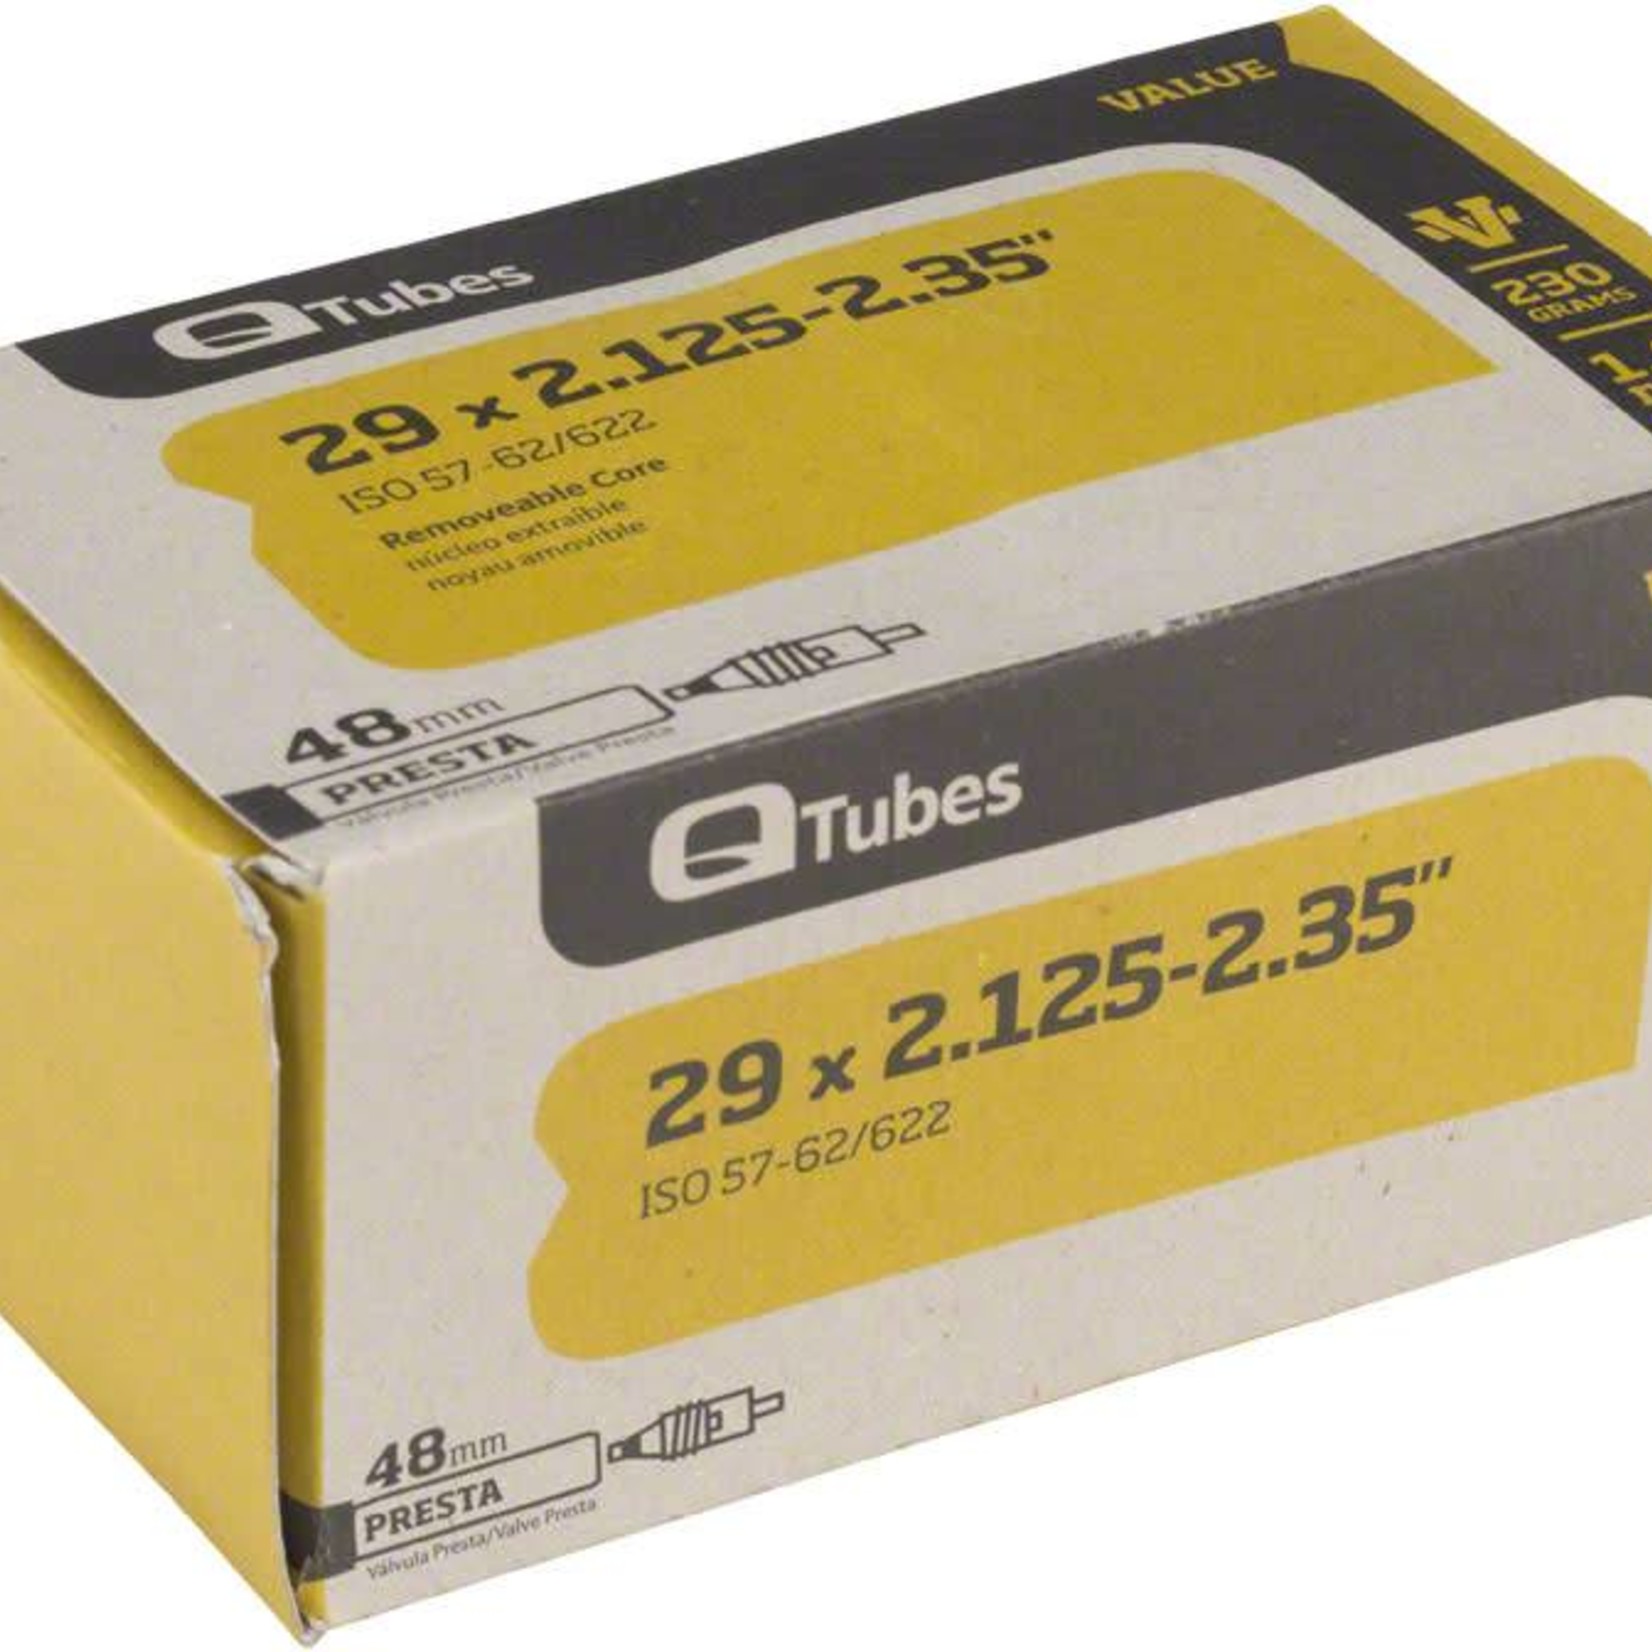 QTubes Q-Tubes Value Series Tube with 48mm Presta Valve: 29" x 2.125-2.35